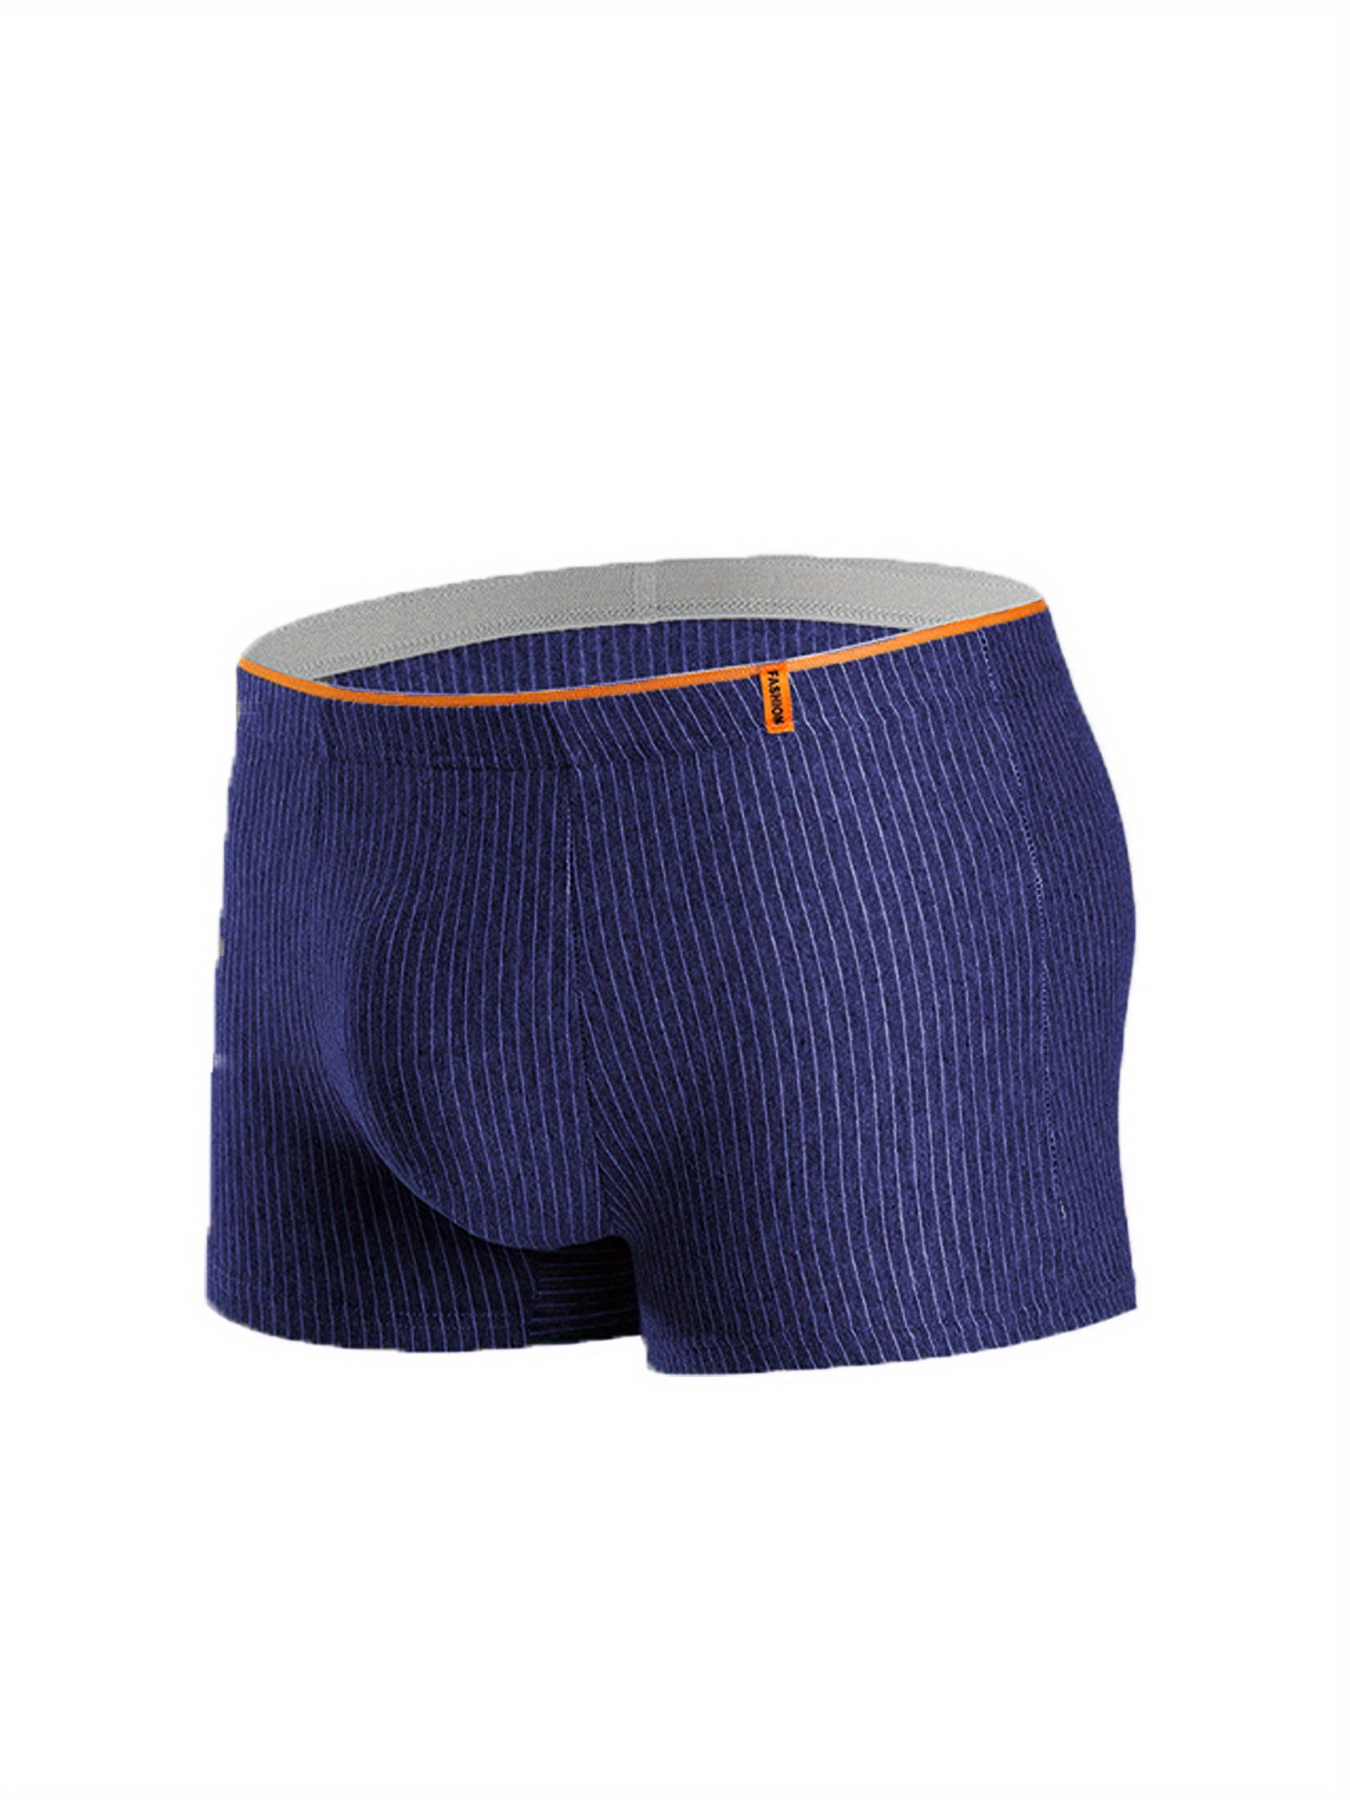 4PCS/Set New High Quality Mens Underwear U Convex Boxers Shorts